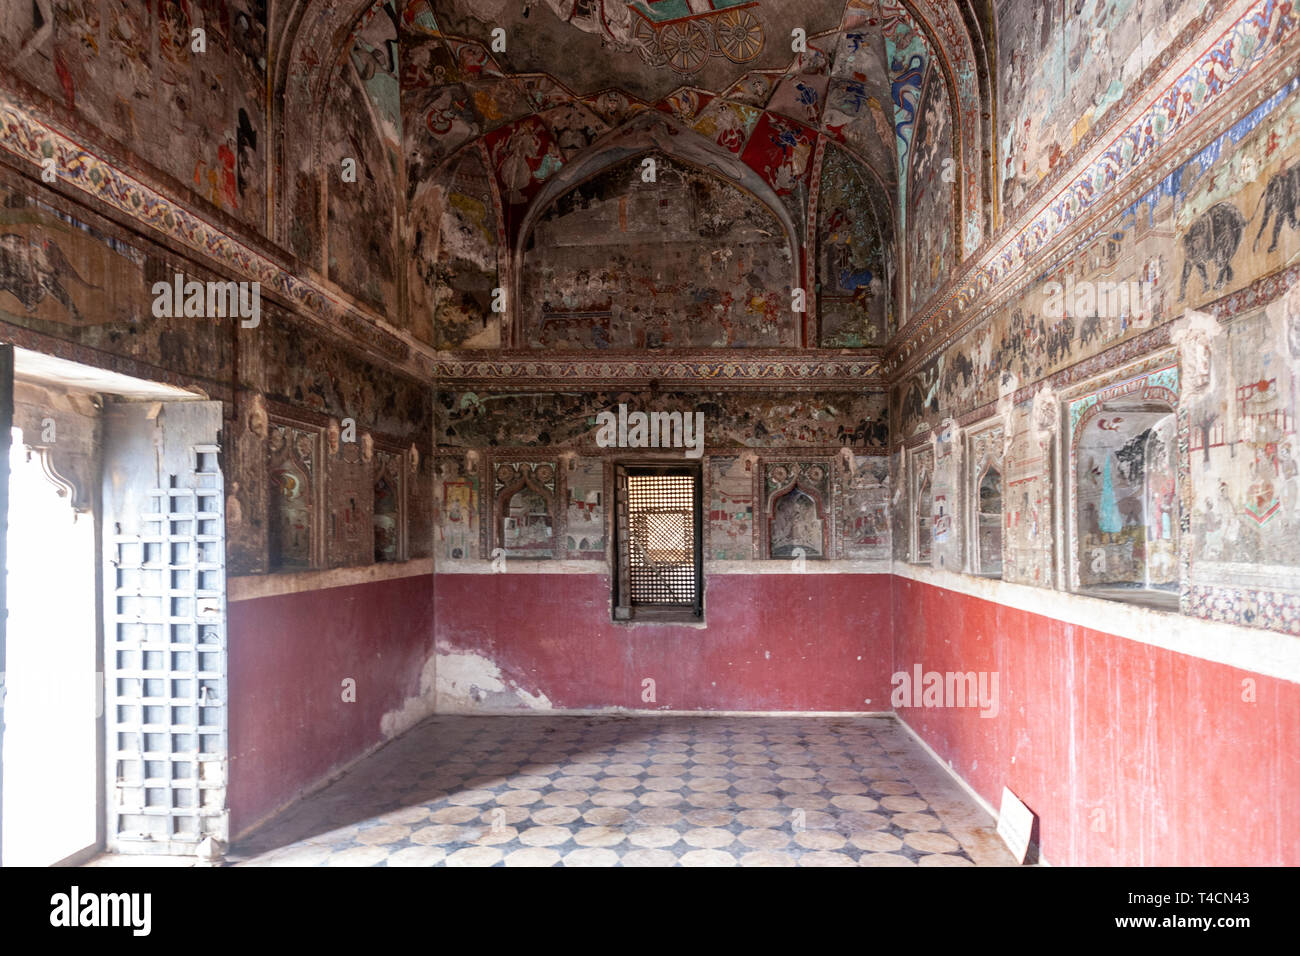 Peintures murales de Badal Mahal, le palais de Bundi, Bundi, Rajasthan, Inde Banque D'Images